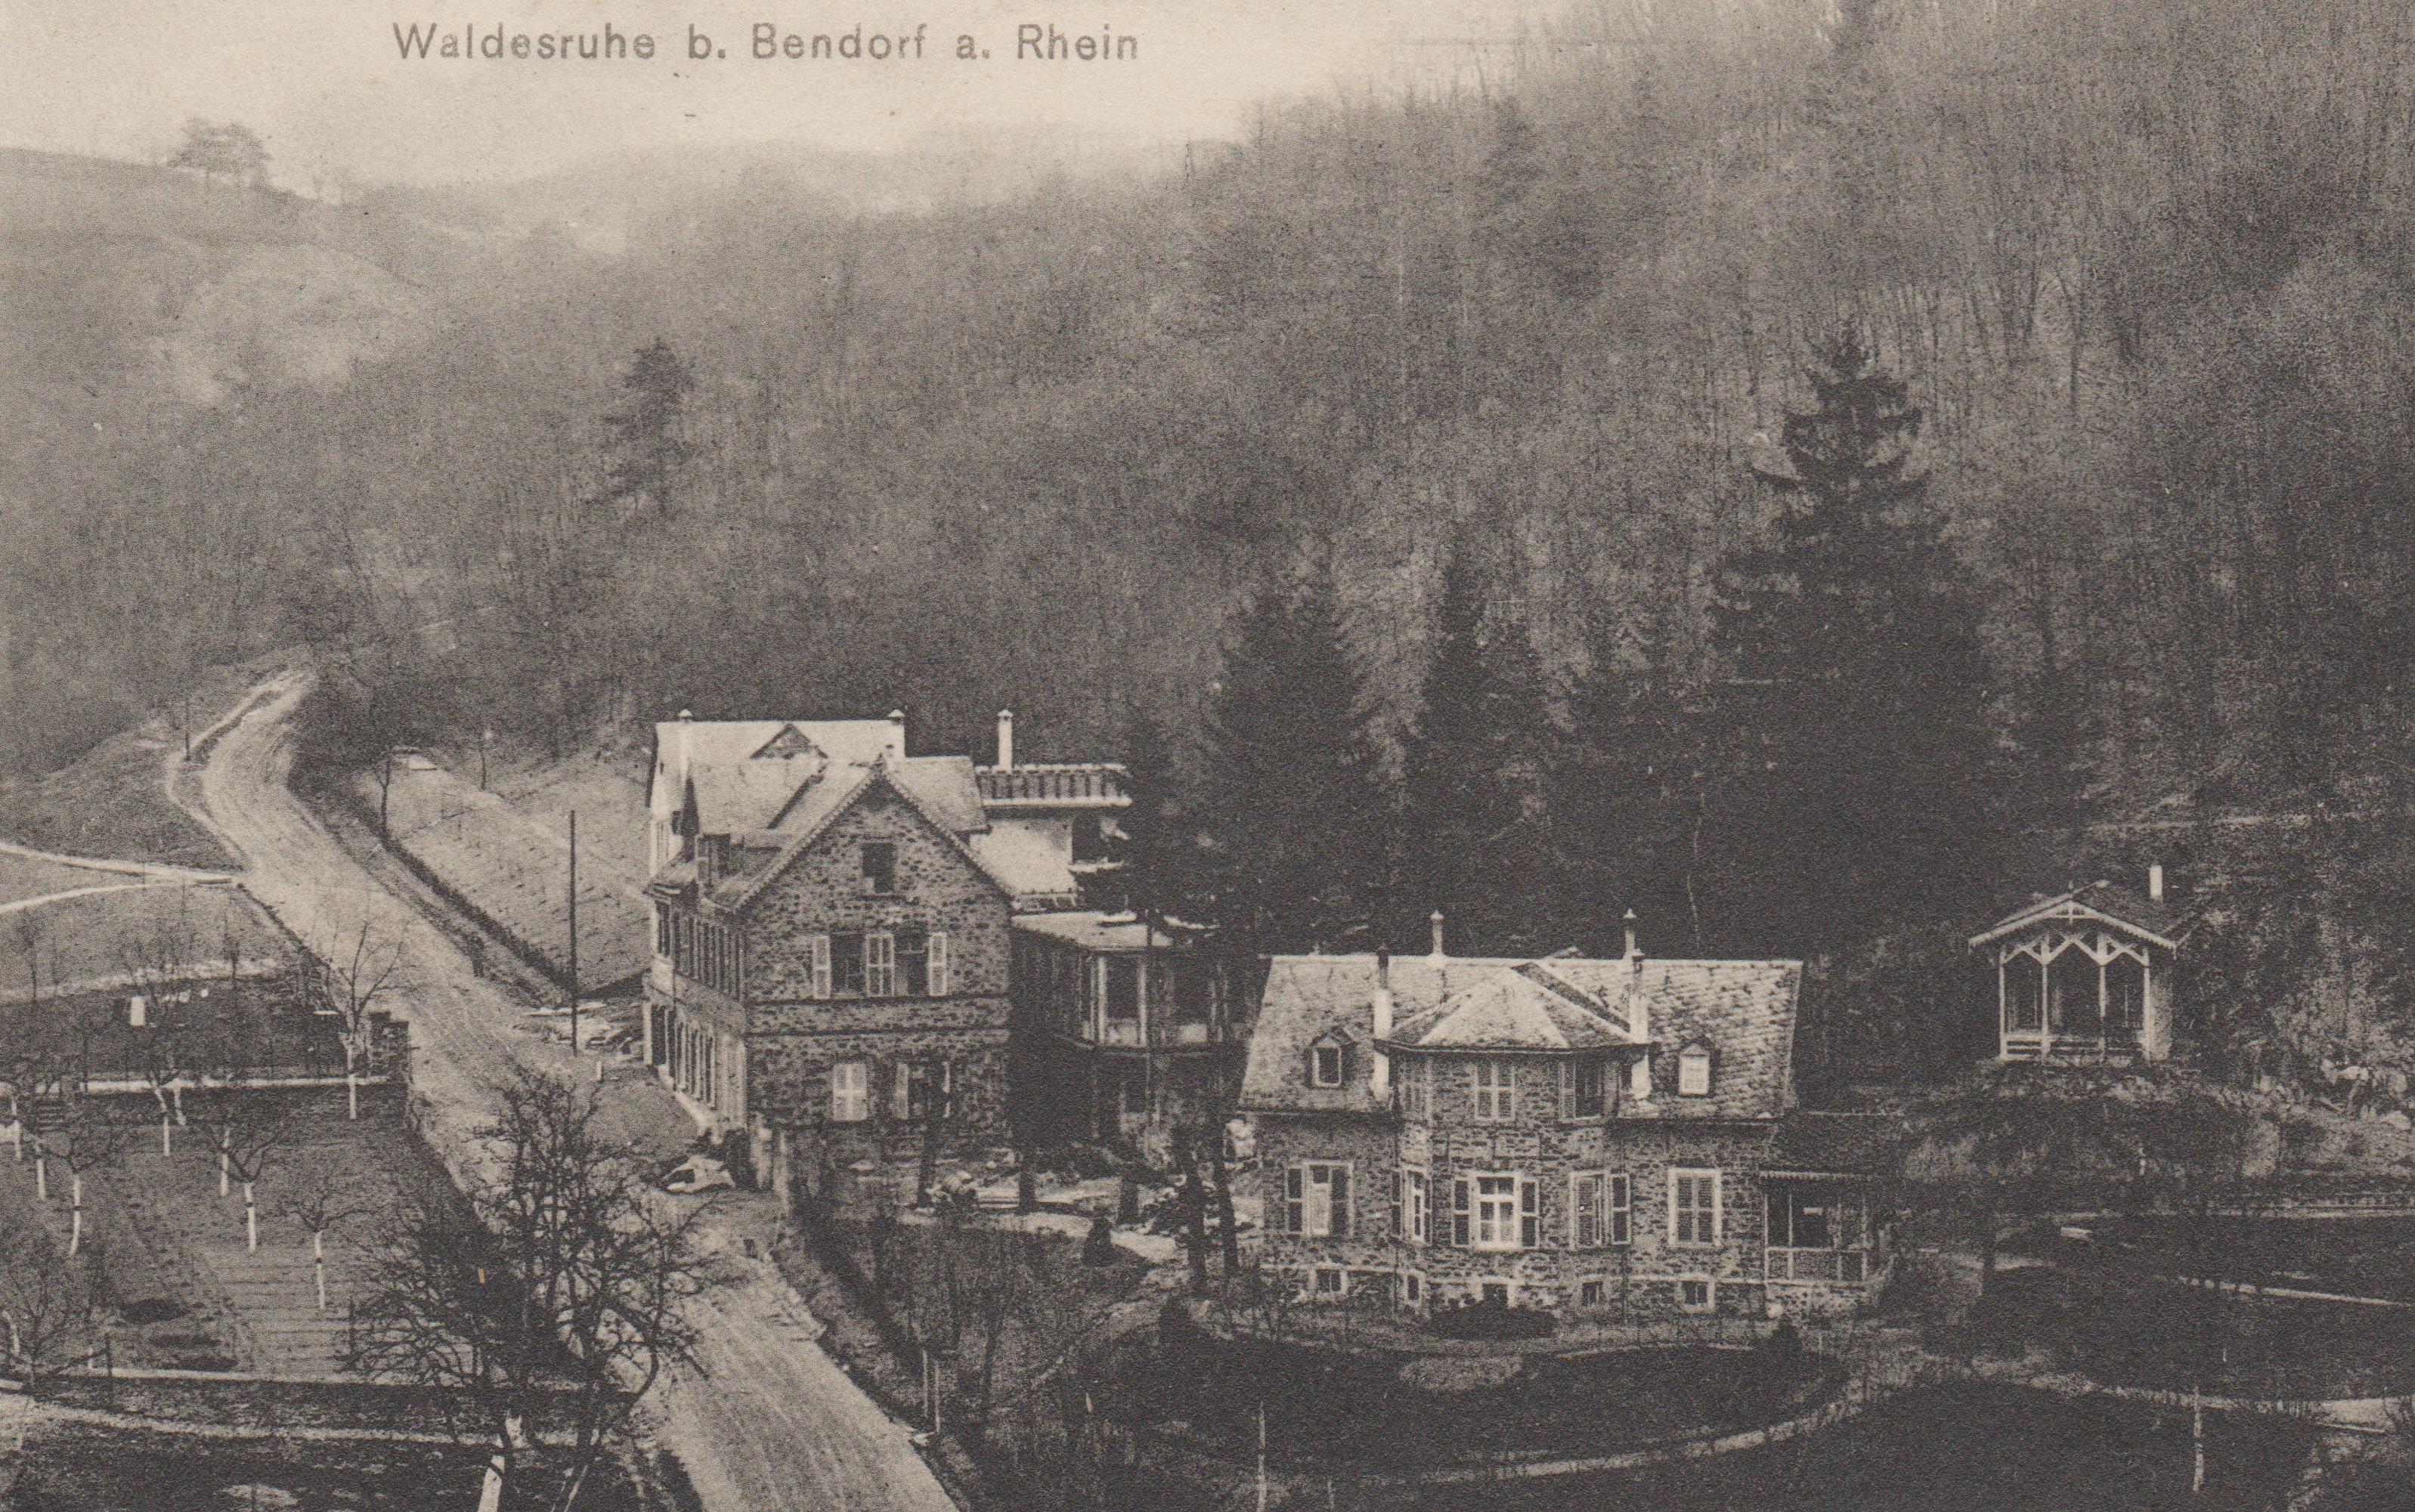 Waldesruhe in Bendorf 1911 (REM CC BY-NC-SA)